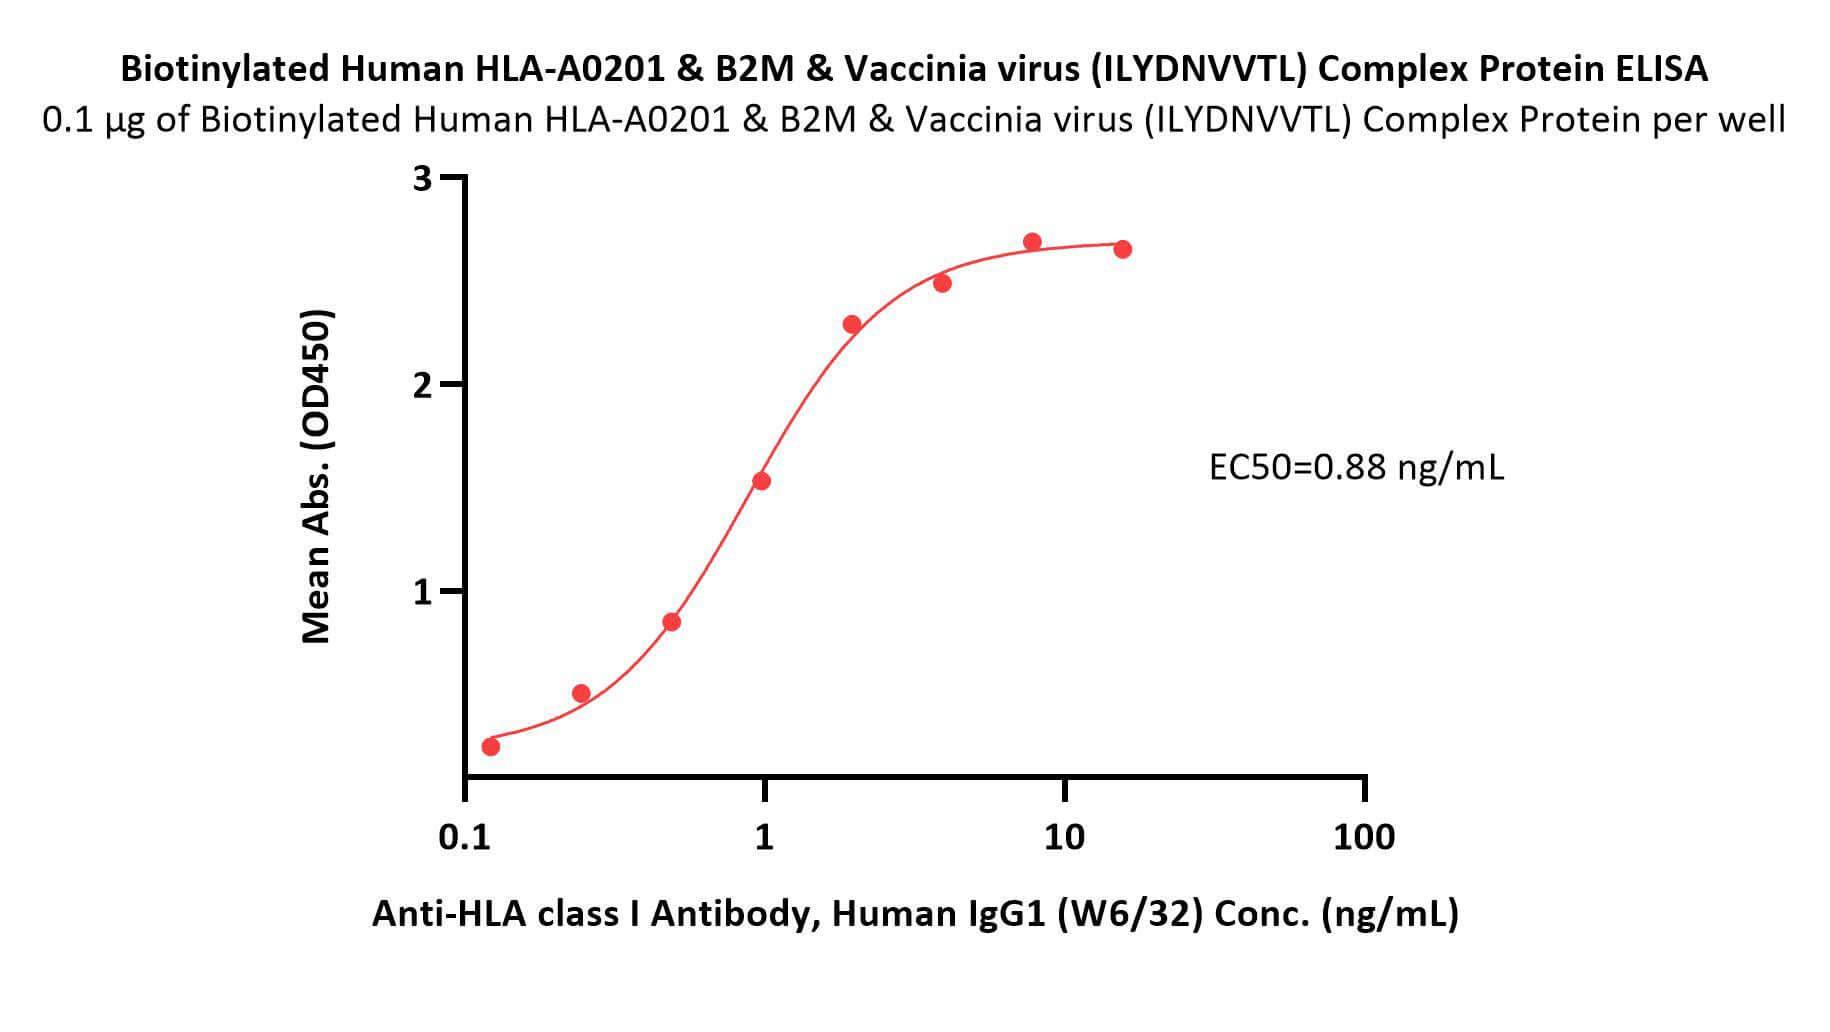 HLA-A*0201 & B2M & Vaccinia virus (ILYDNVVTL) ELISA